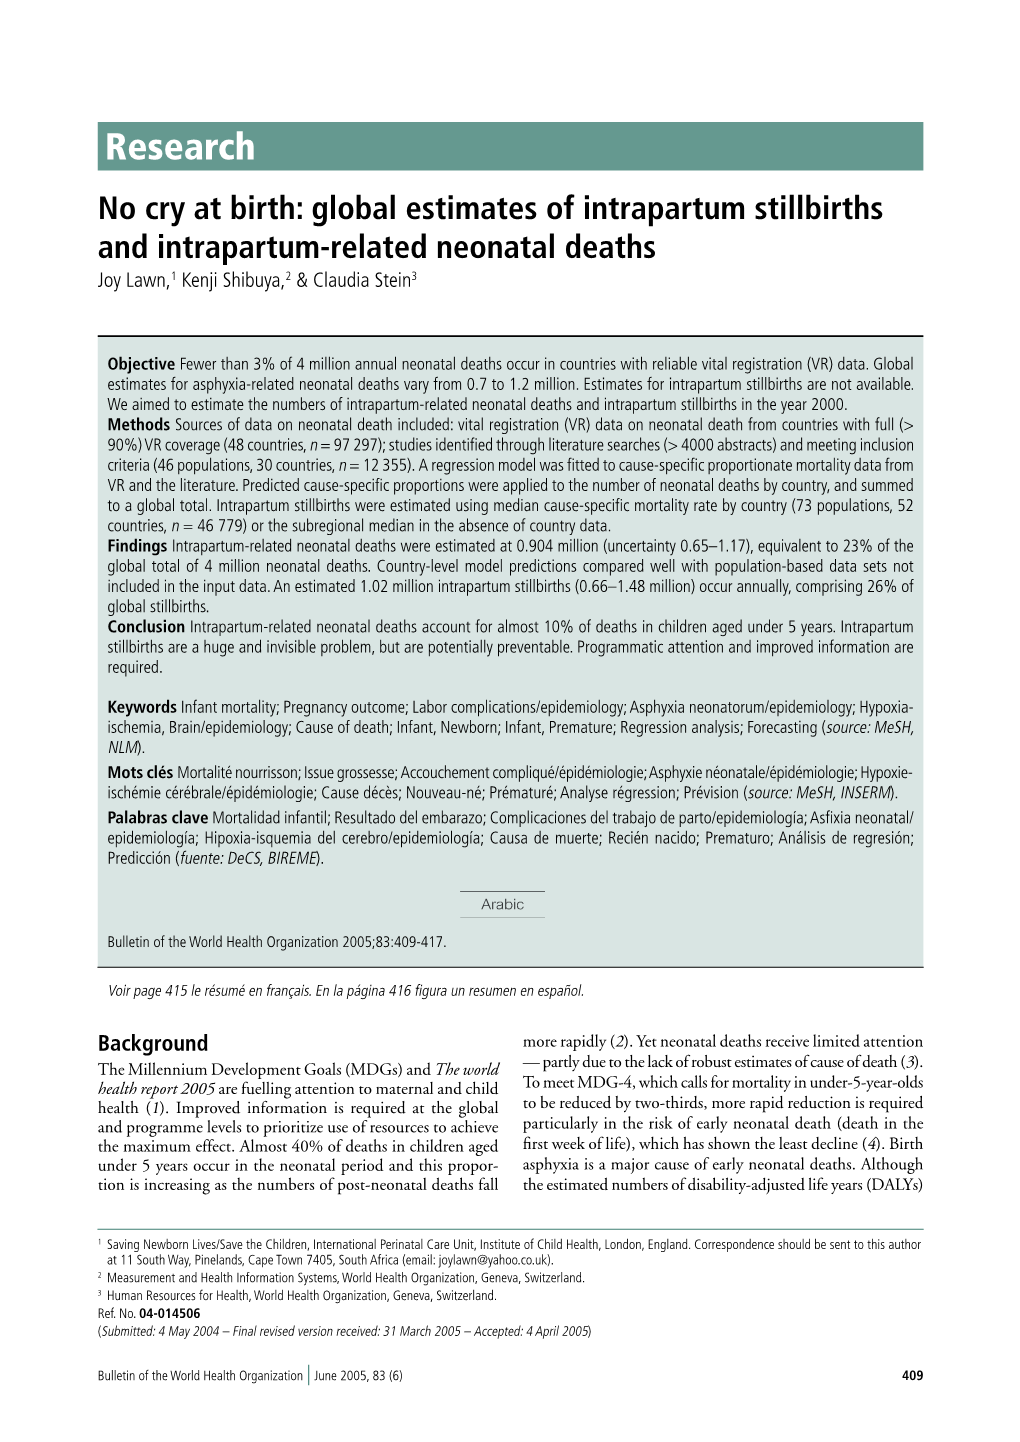 Research No Cry at Birth: Global Estimates of Intrapartum Stillbirths and Intrapartum-Related Neonatal Deaths Joy Lawn,1 Kenji Shibuya,2 & Claudia Stein3